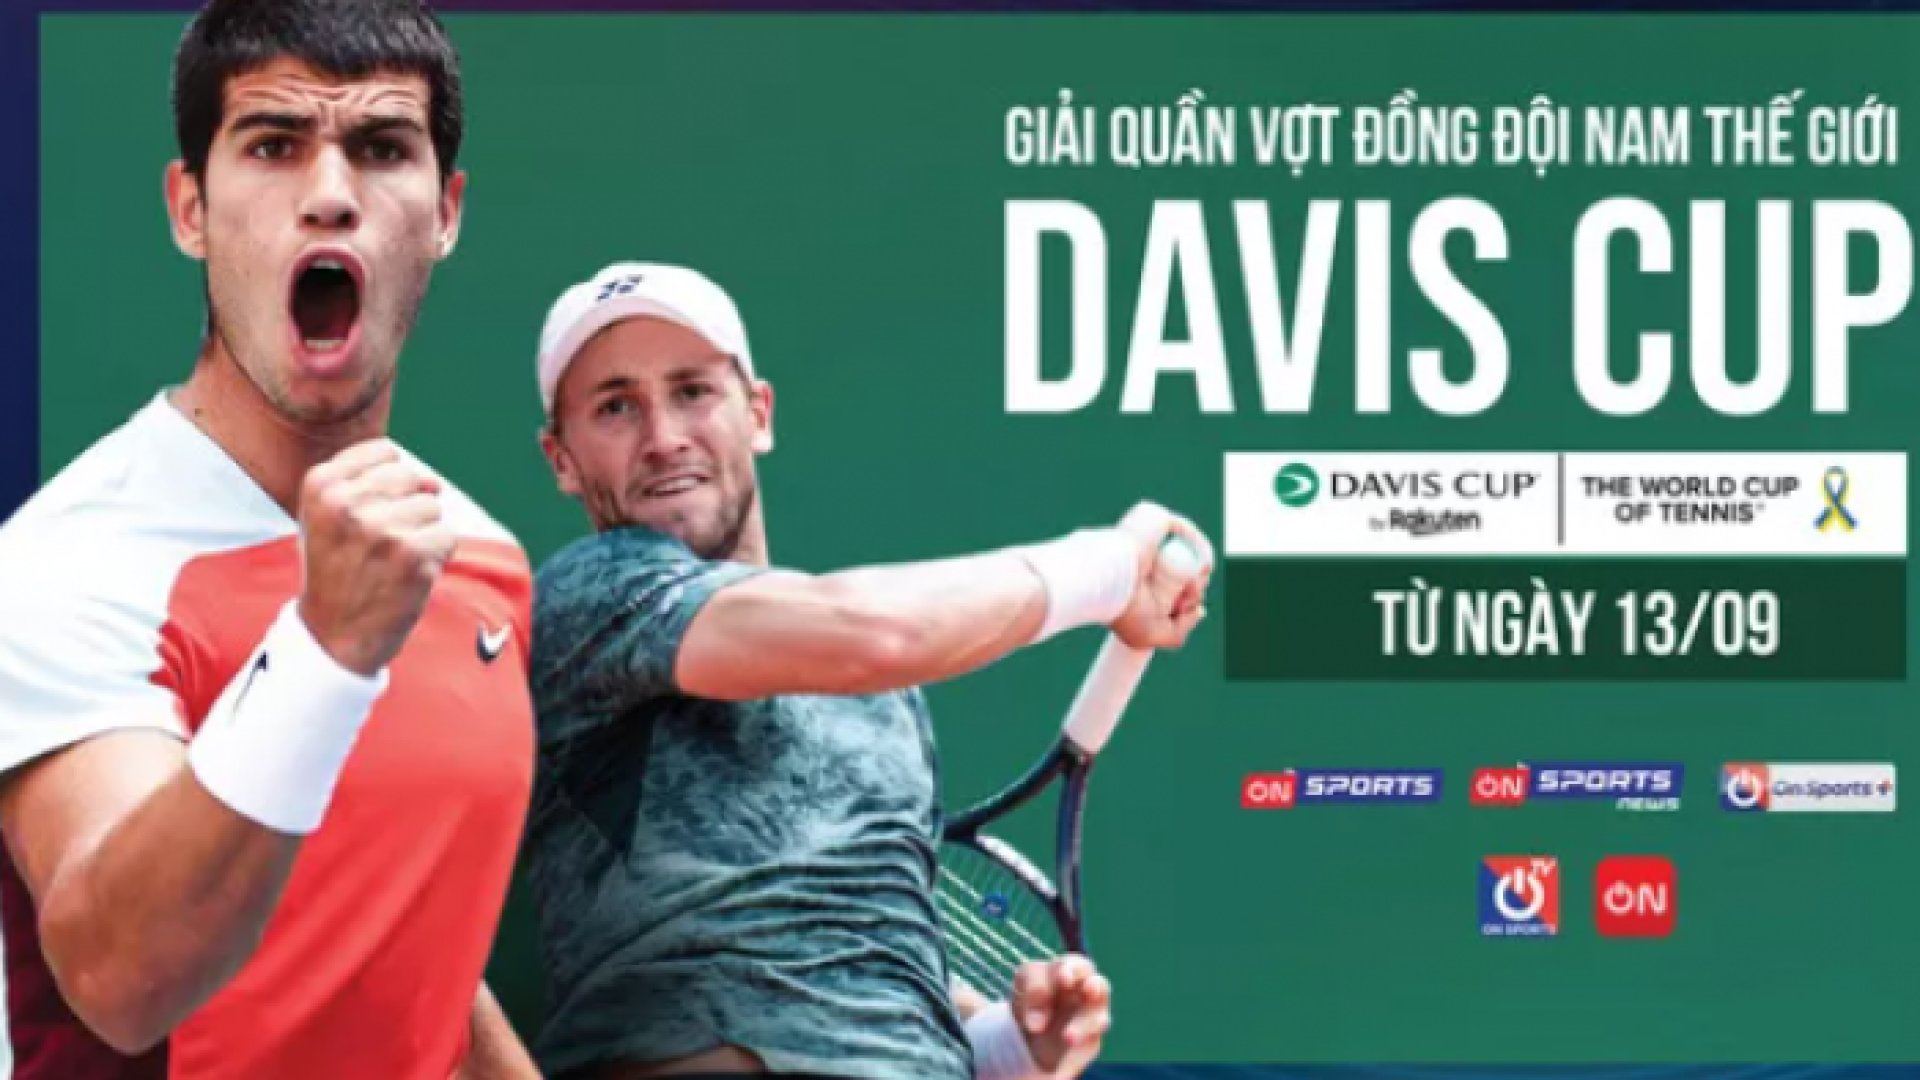 Xem trực tiếp Davis Cup 2022 trên VTVcab